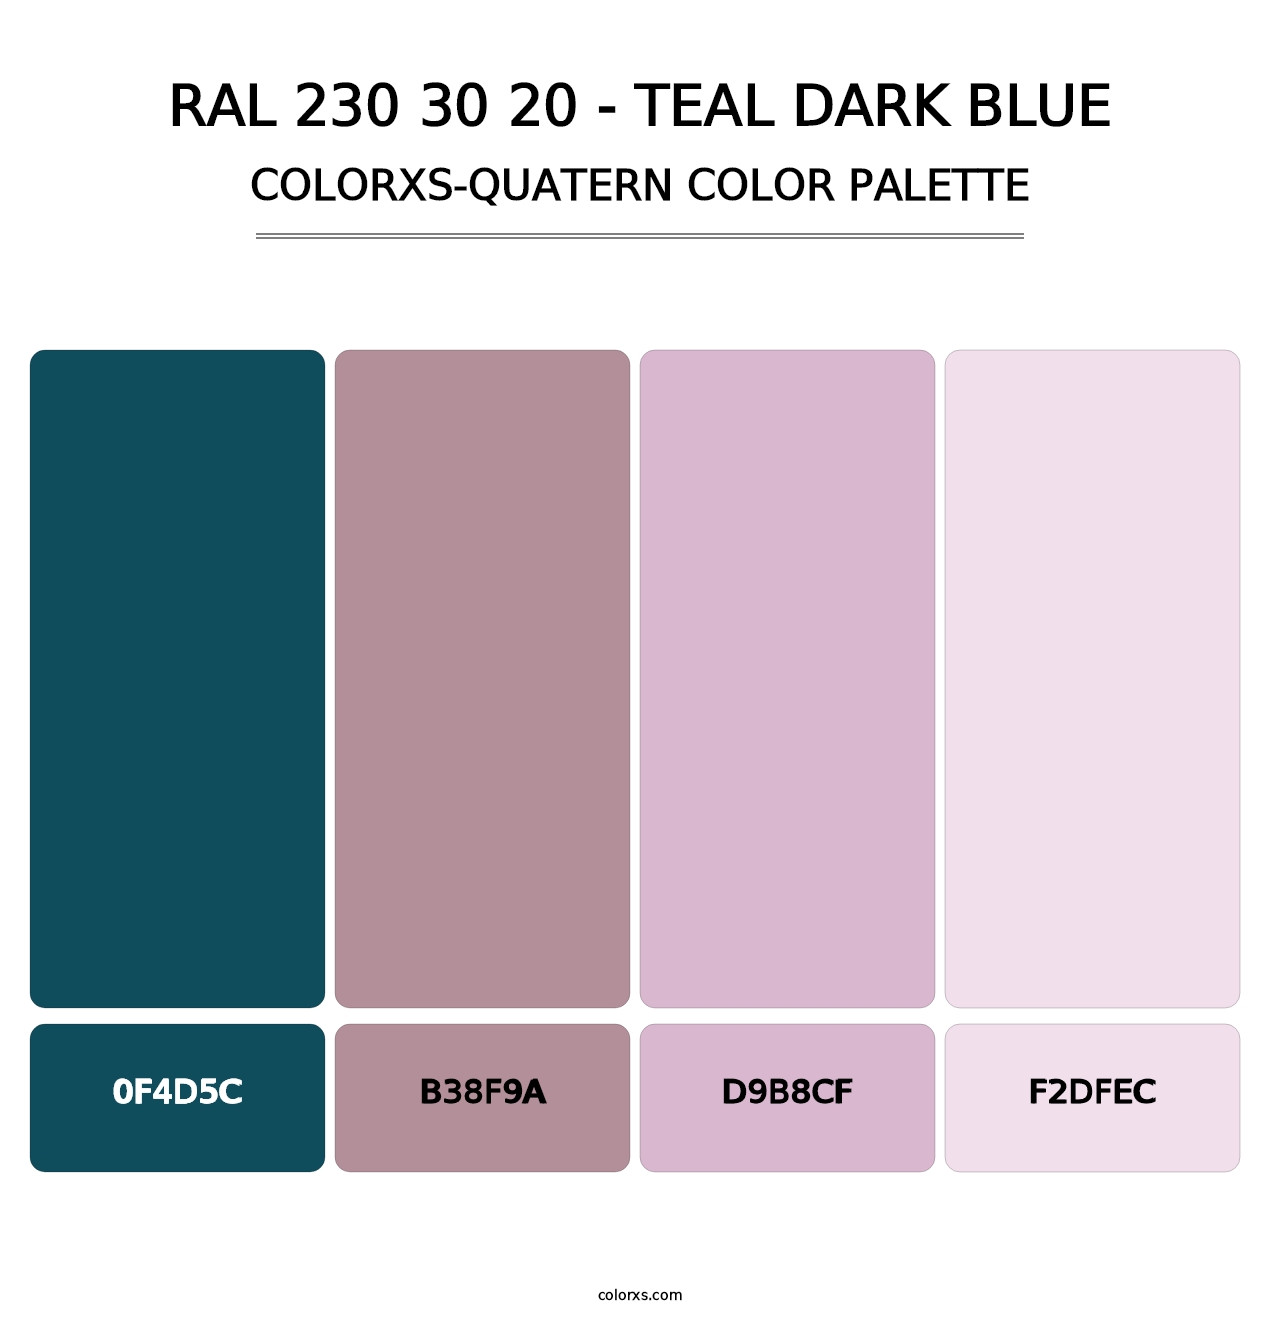 RAL 230 30 20 - Teal Dark Blue - Colorxs Quatern Palette